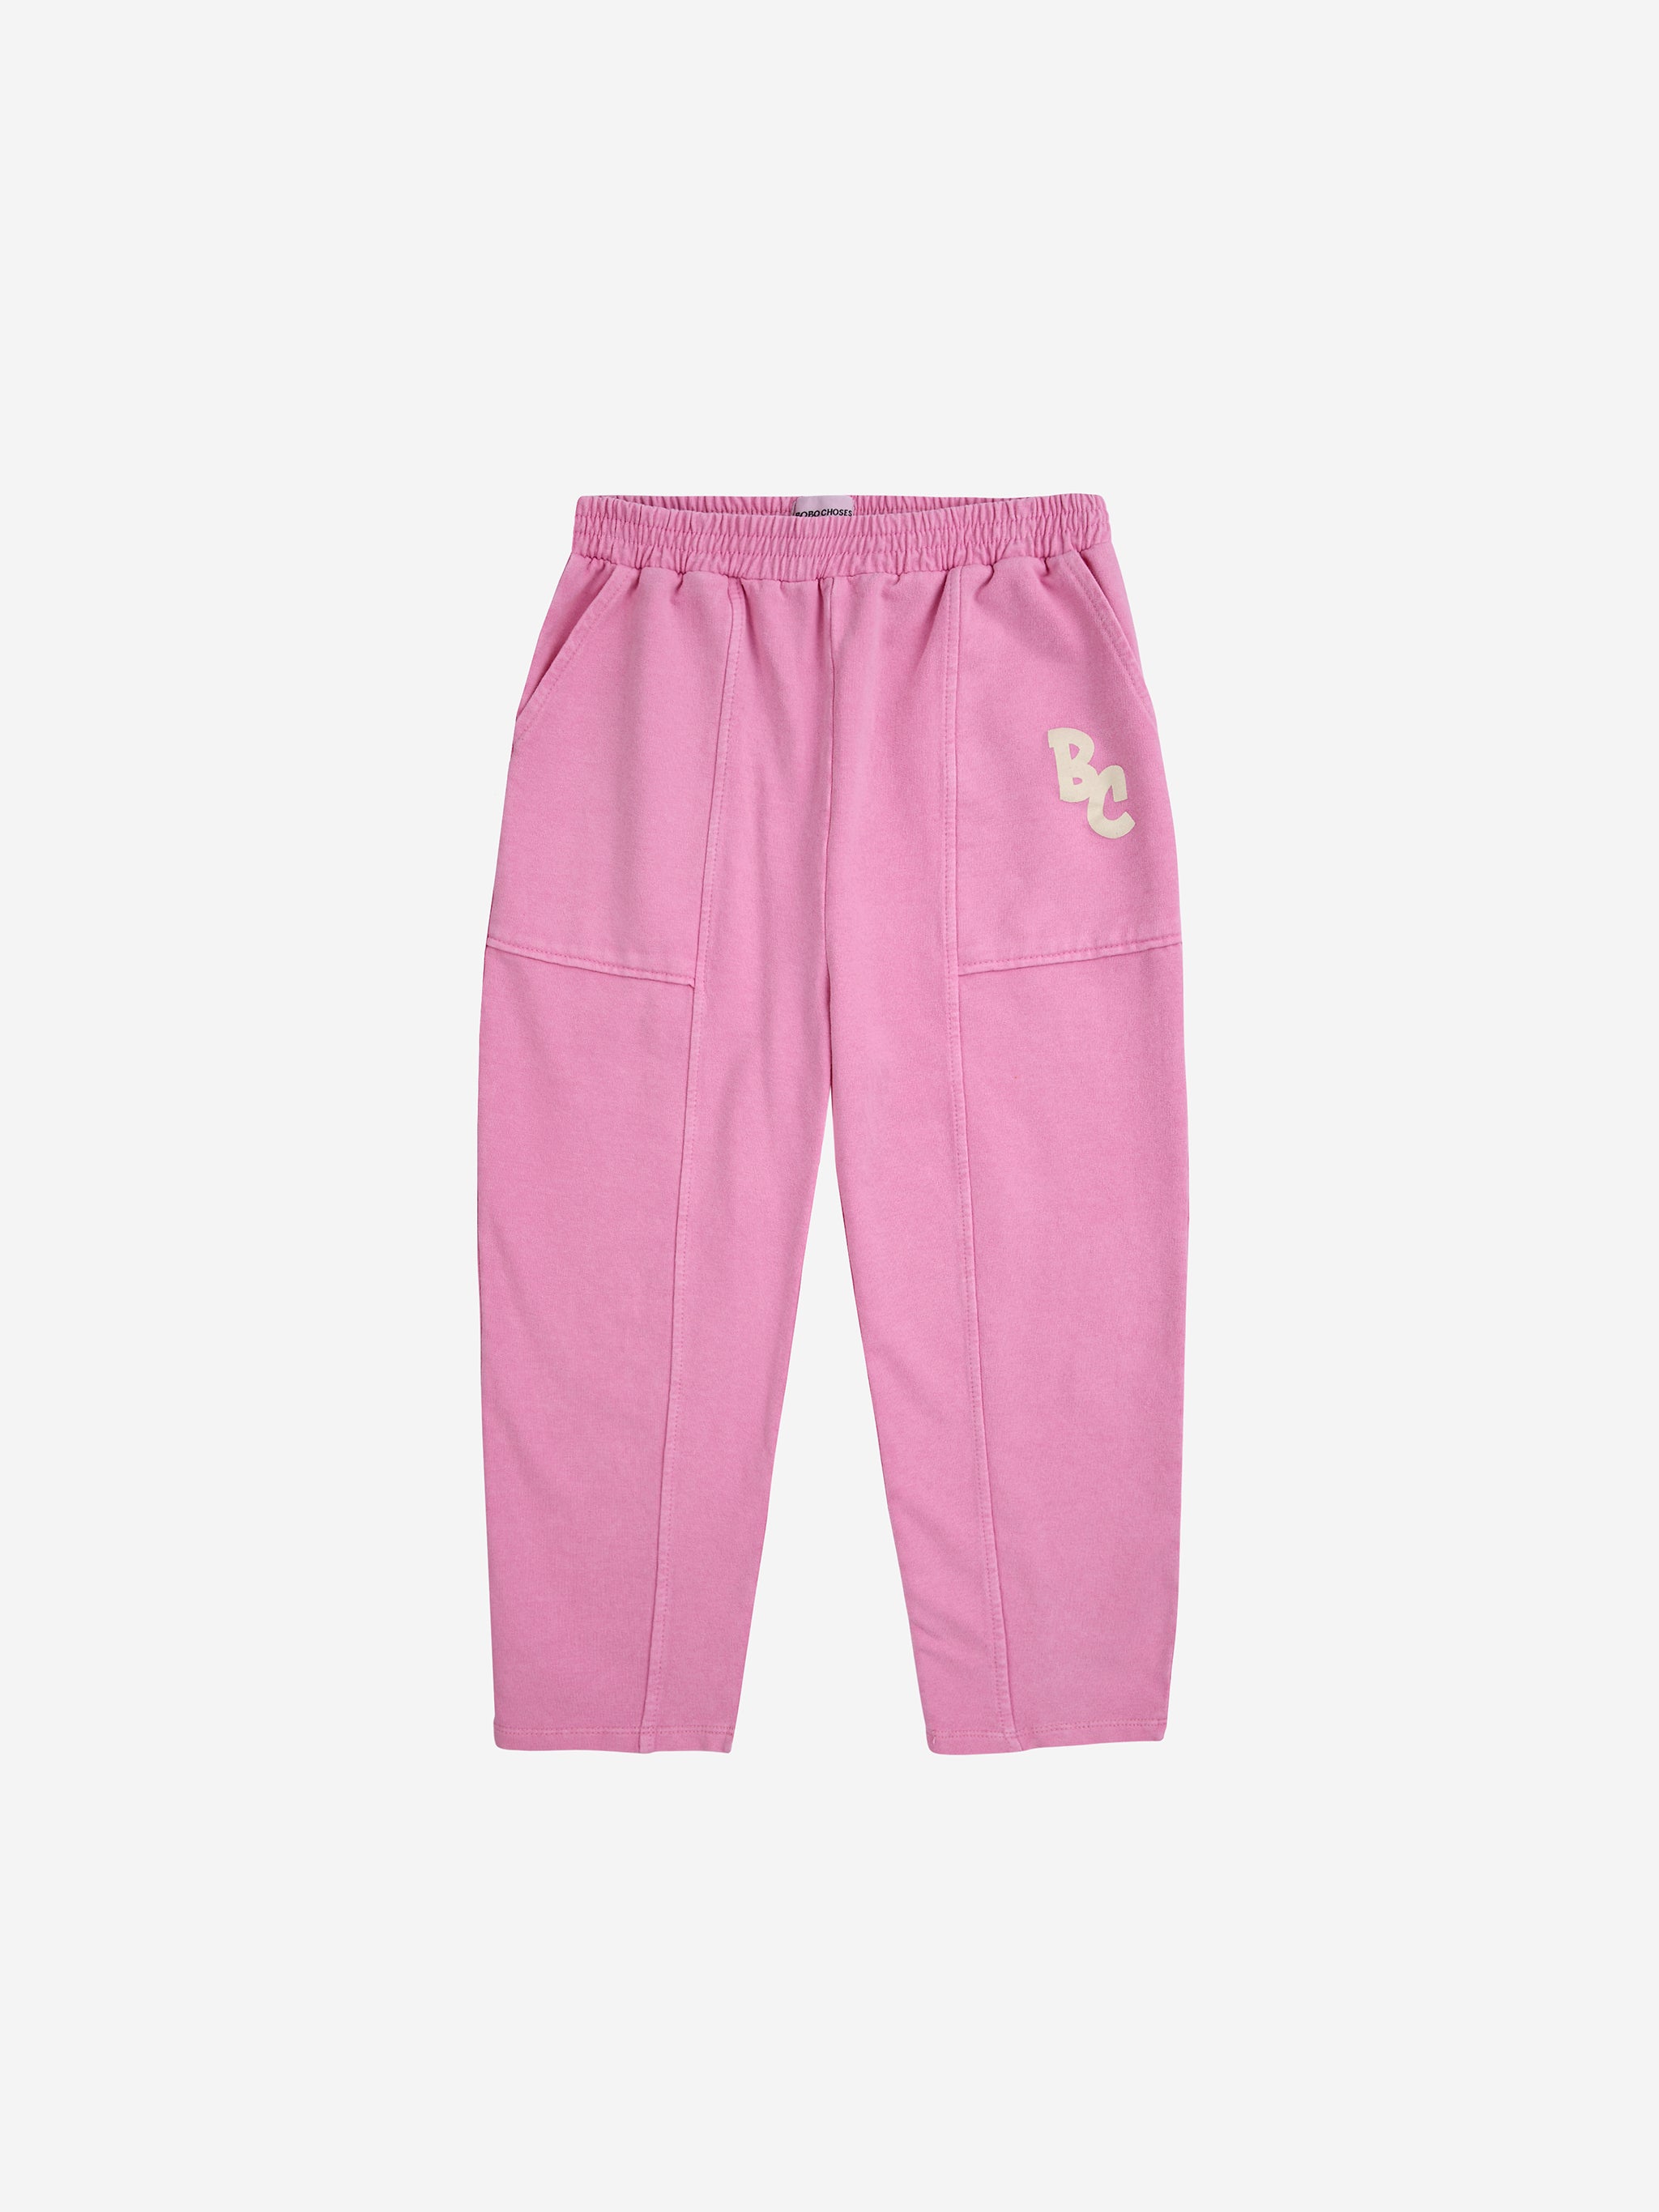 Bobo Choses B.C. Pink jogging pants